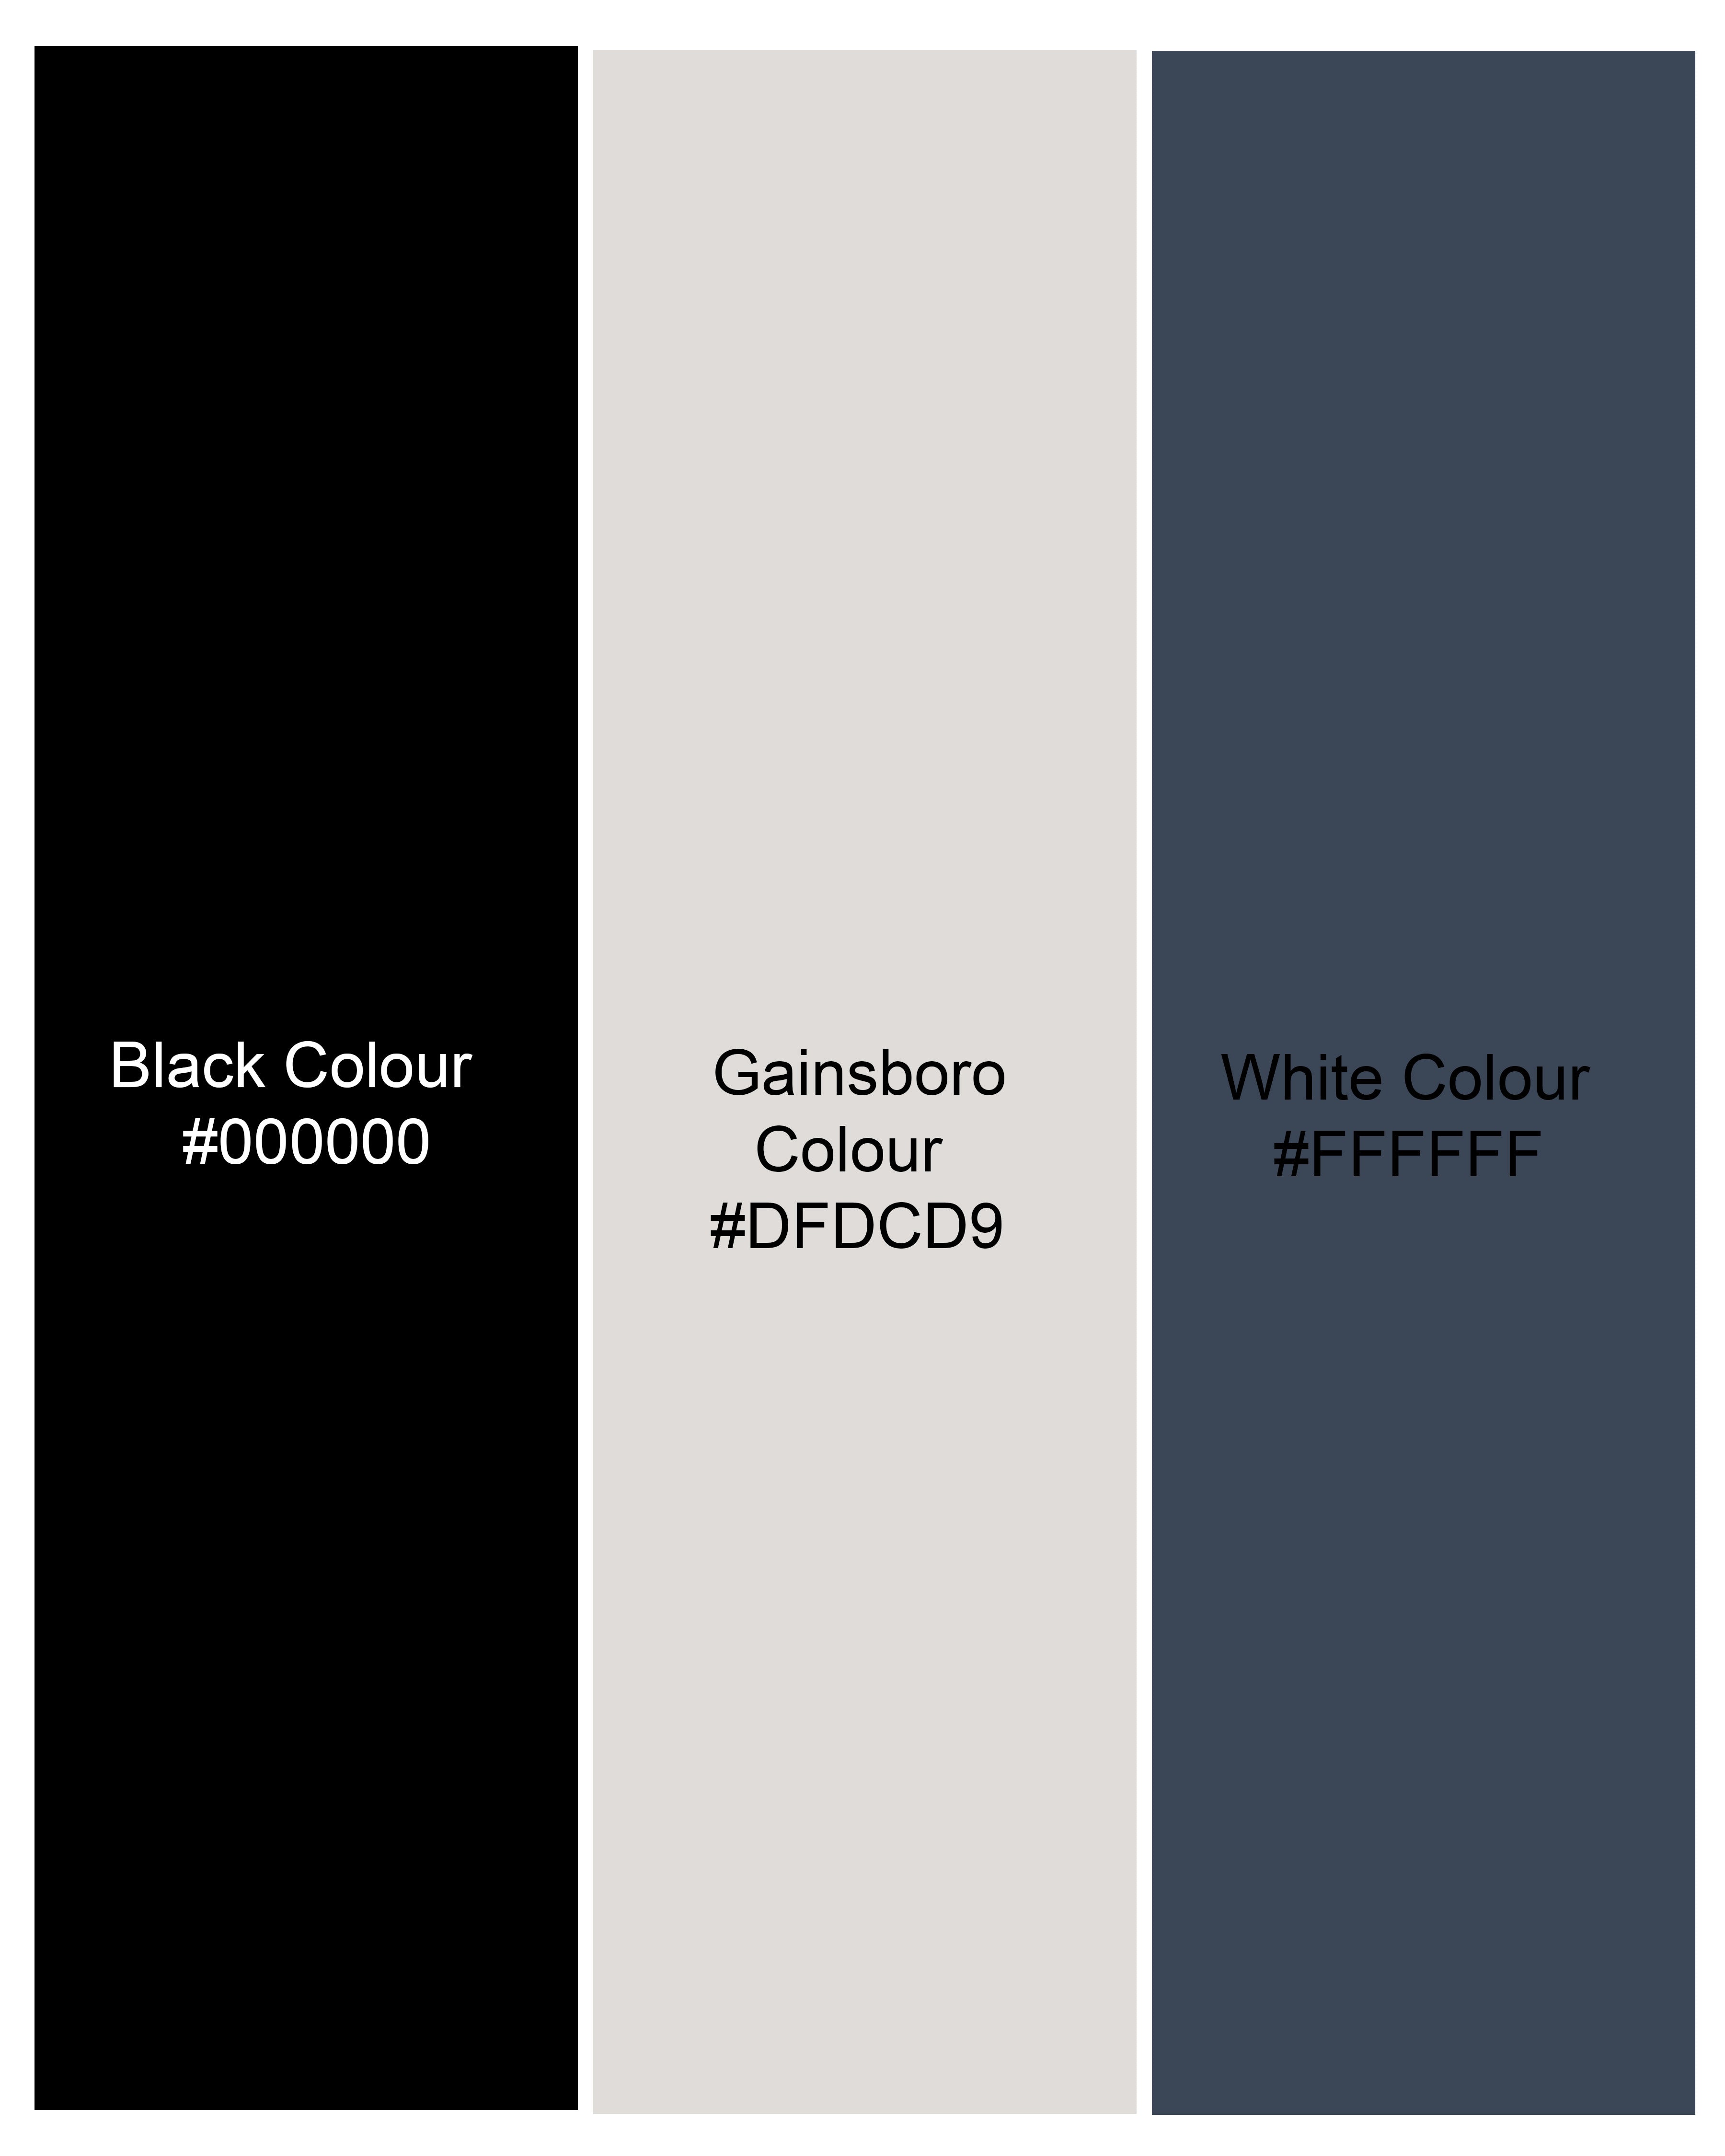 Jade Black with Paisley Printed Premium Cotton Shirt  8503-BLK-38,8503-BLK-H-38,8503-BLK-39,8503-BLK-H-39,8503-BLK-40,8503-BLK-H-40,8503-BLK-42,8503-BLK-H-42,8503-BLK-44,8503-BLK-H-44,8503-BLK-46,8503-BLK-H-46,8503-BLK-48,8503-BLK-H-48,8503-BLK-50,8503-BLK-H-50,8503-BLK-52,8503-BLK-H-52